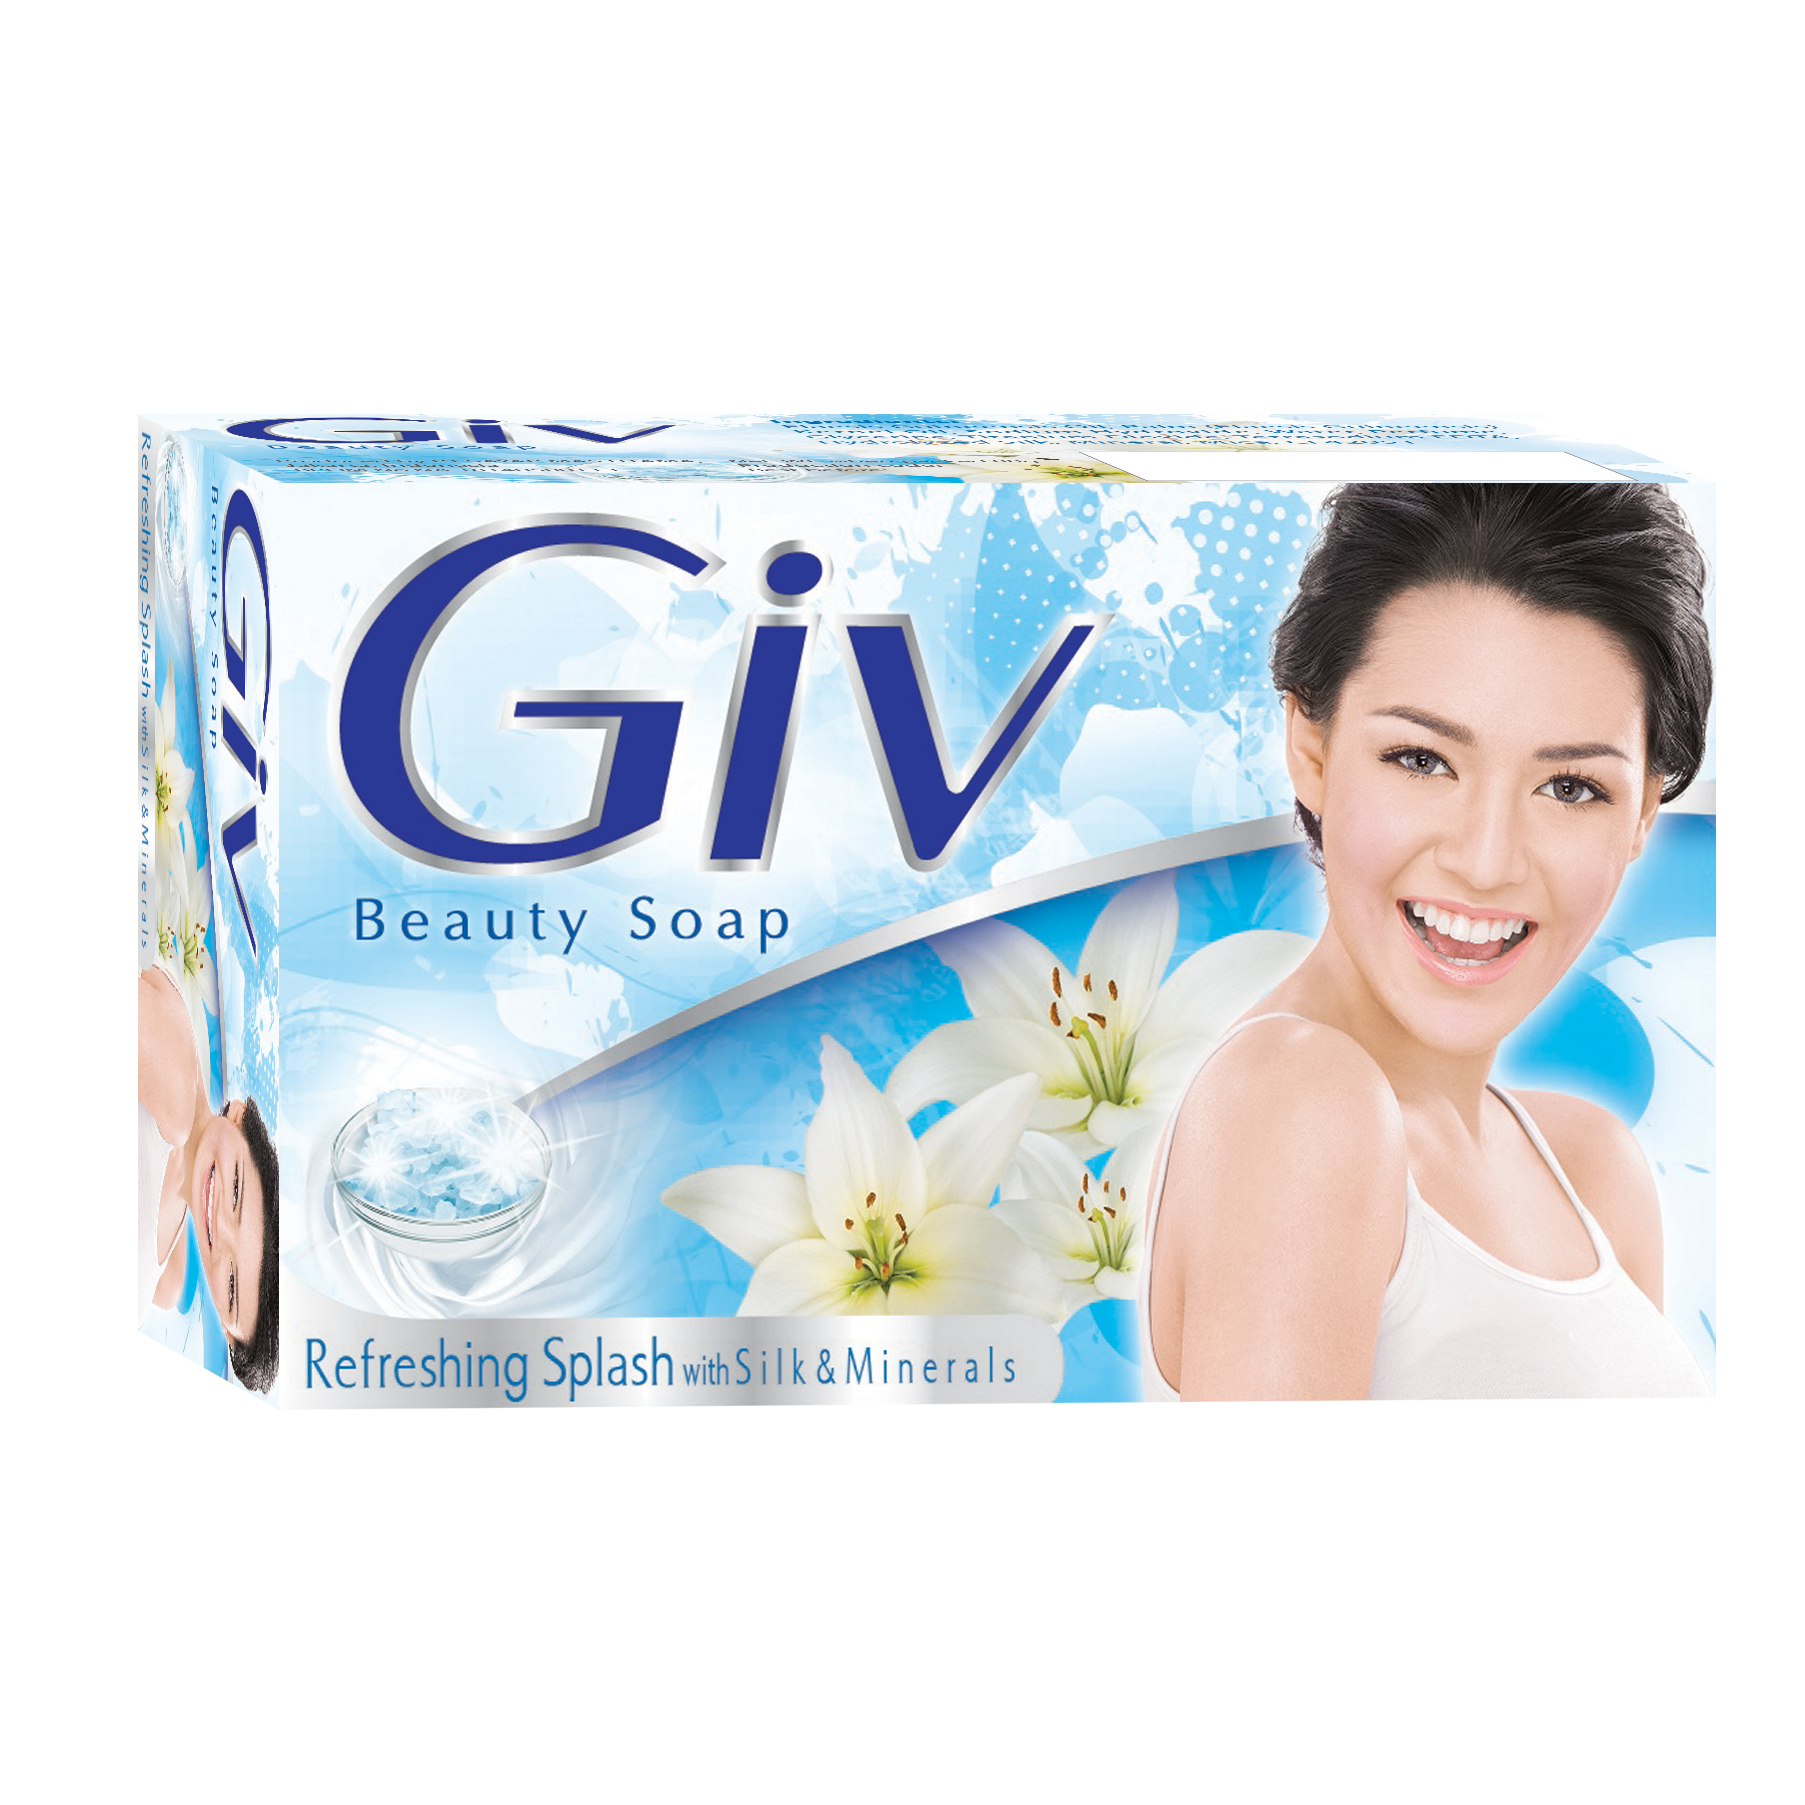 Giv мыло. Beauty Soap мыло. Refresh Soap. Poonak Beauty мыло.